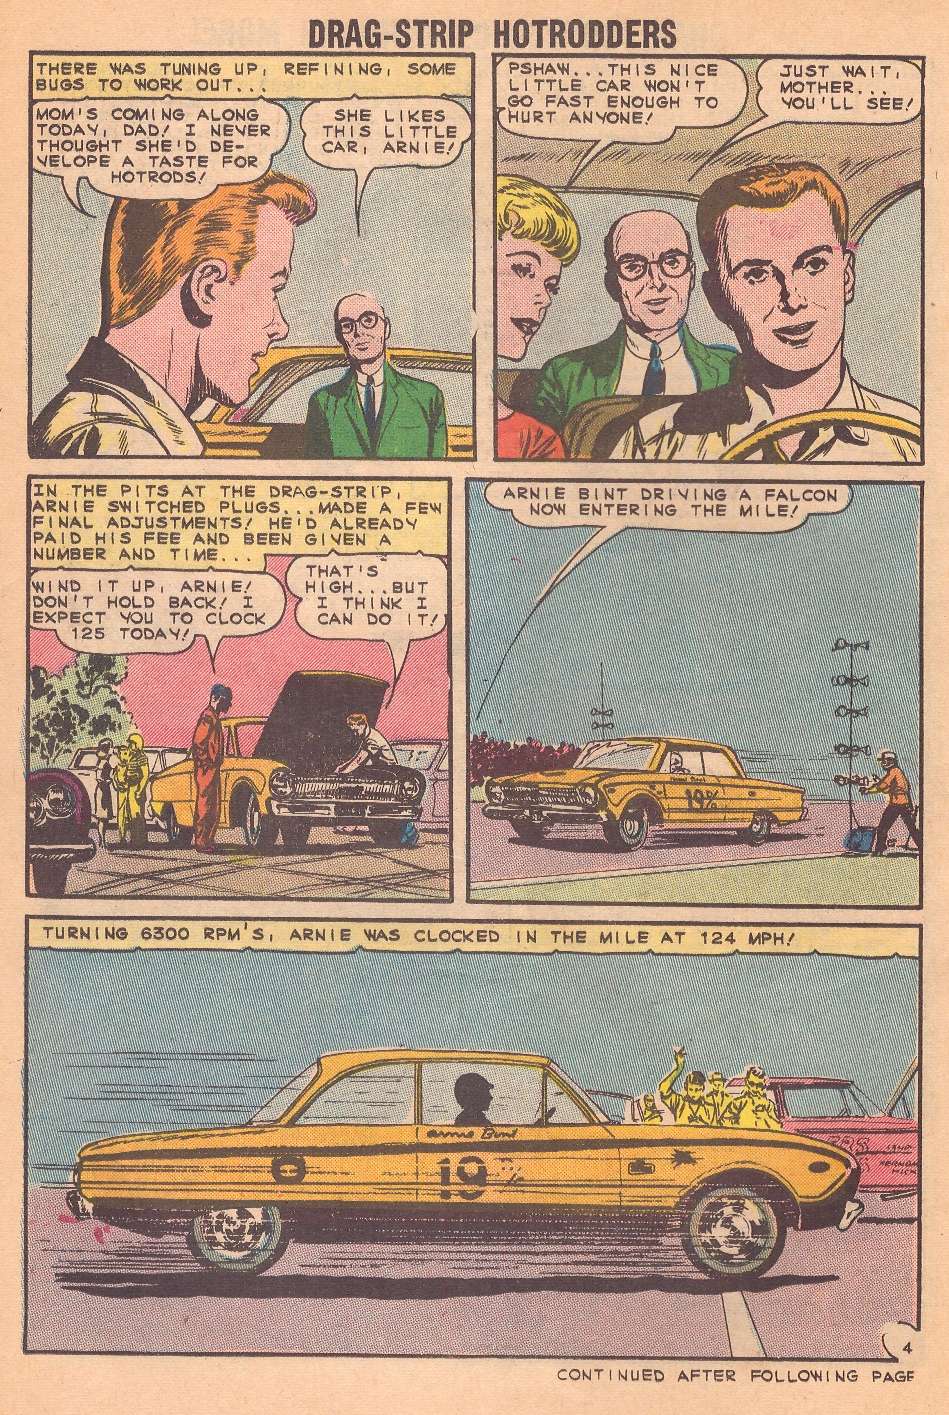 Drag-Strip Hotrodders - 60s Us Comics - January 1965 - Page 2 13203611